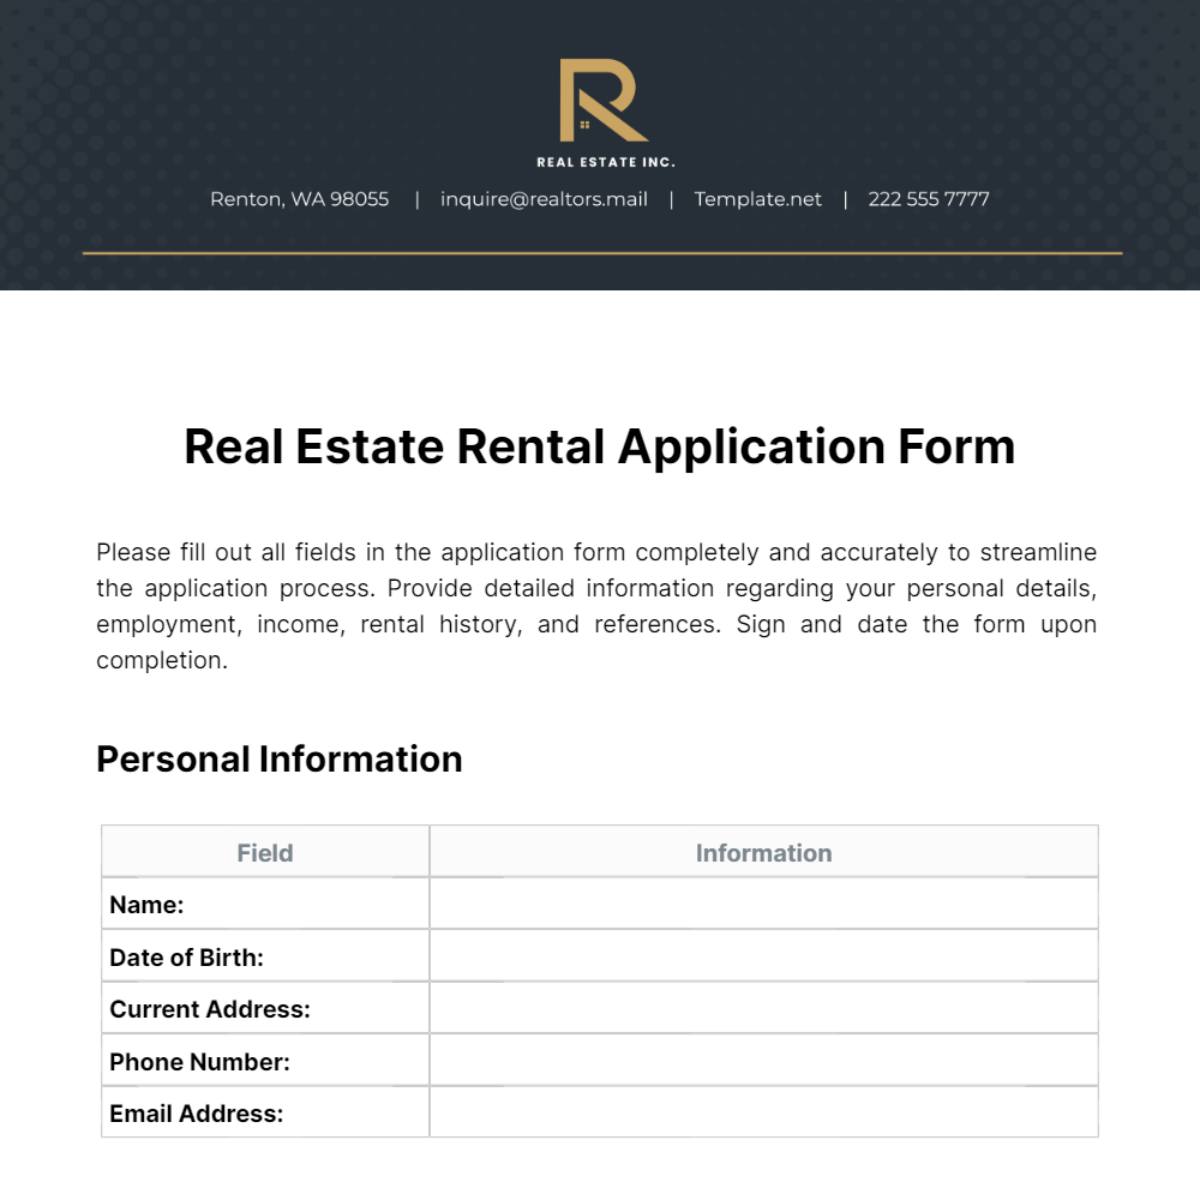 Real Estate Rental Application Form Template